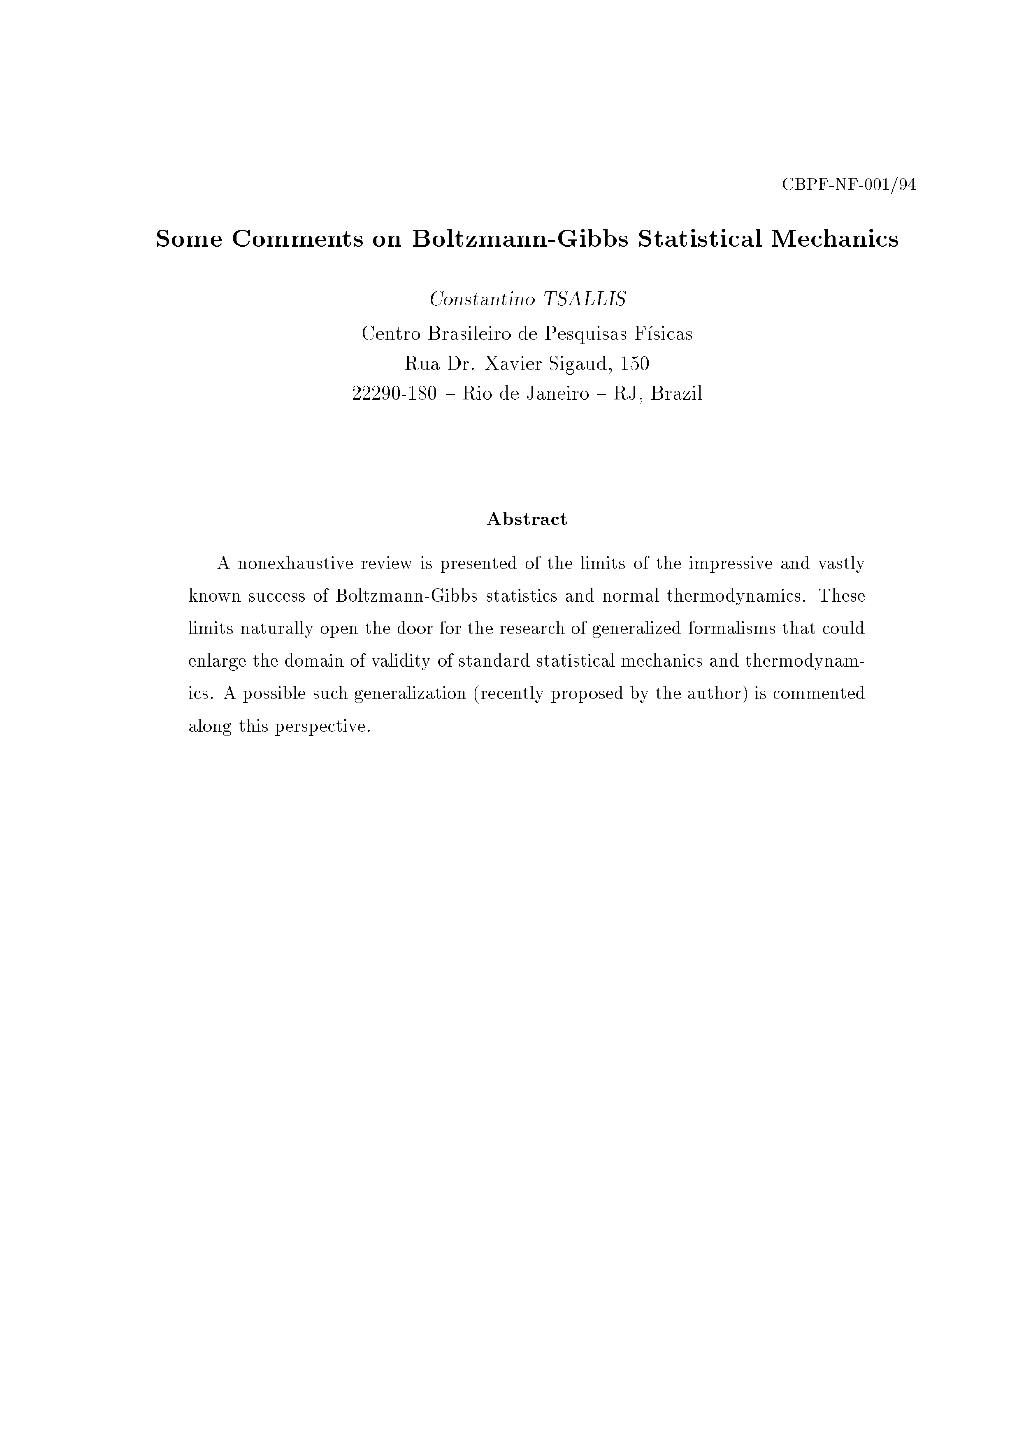 Some Comments on Boltzmann-Gibbs Statistical Mechanics